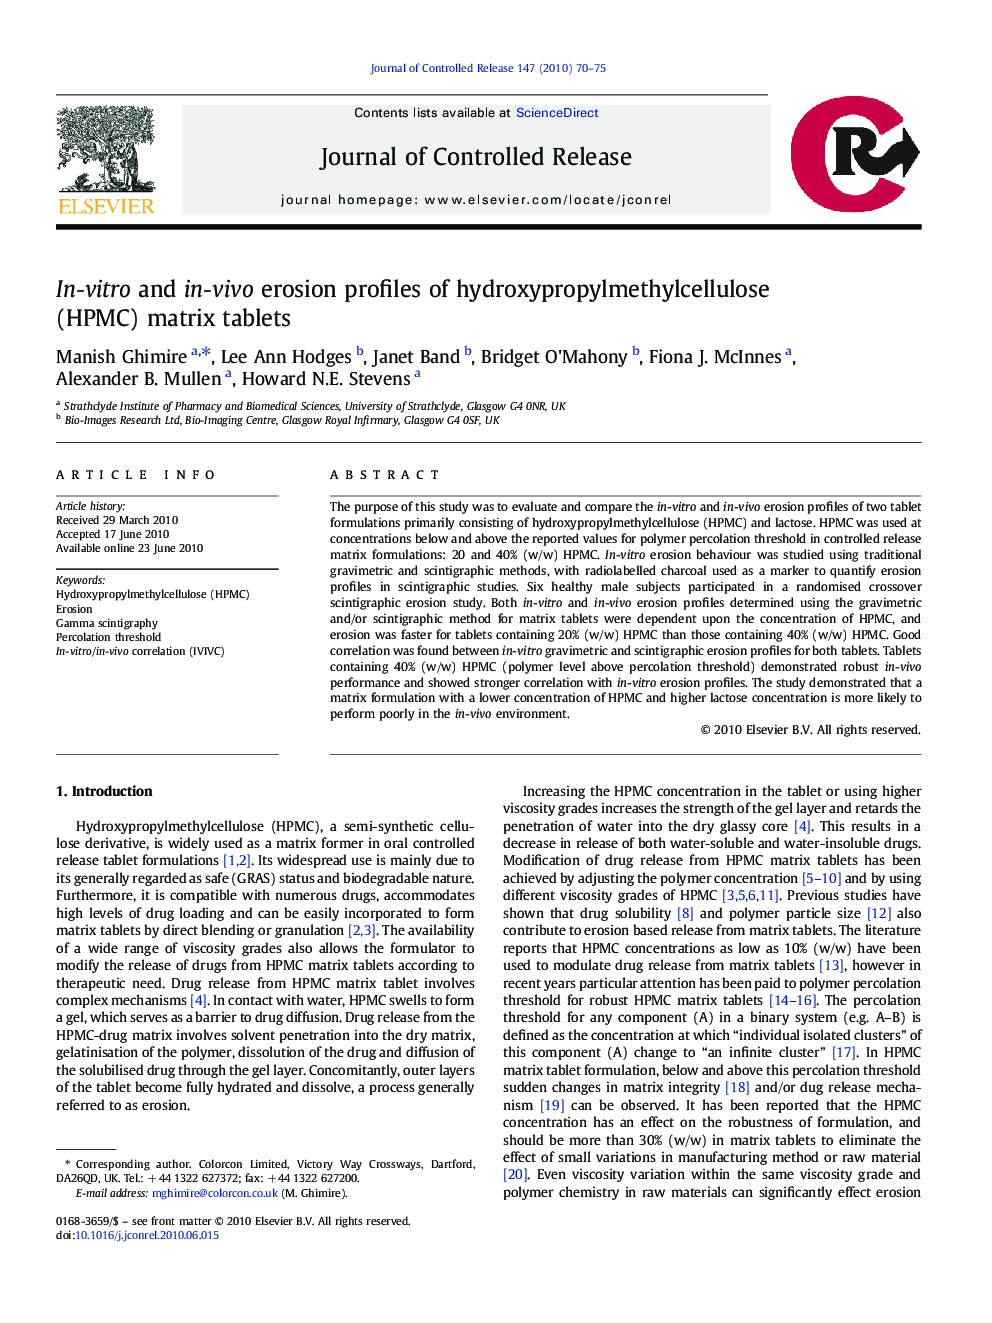 In-vitro and in-vivo erosion profiles of hydroxypropylmethylcellulose (HPMC) matrix tablets